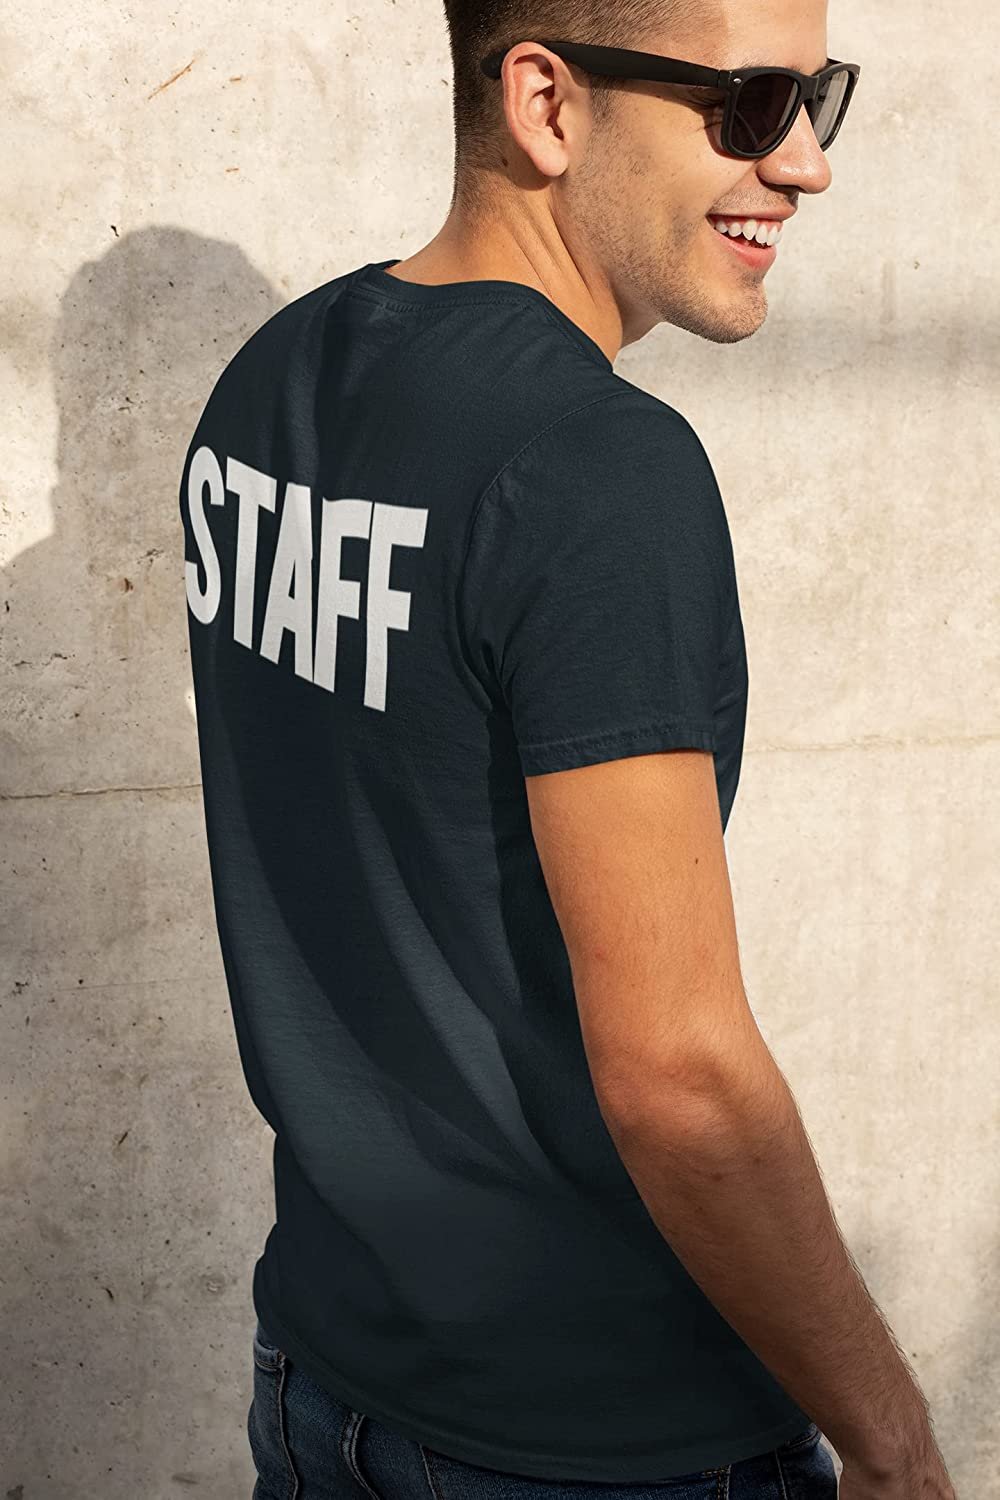 Men's Staff T-Shirt Screen Print Tee (Chest & Back Print, Black & White)